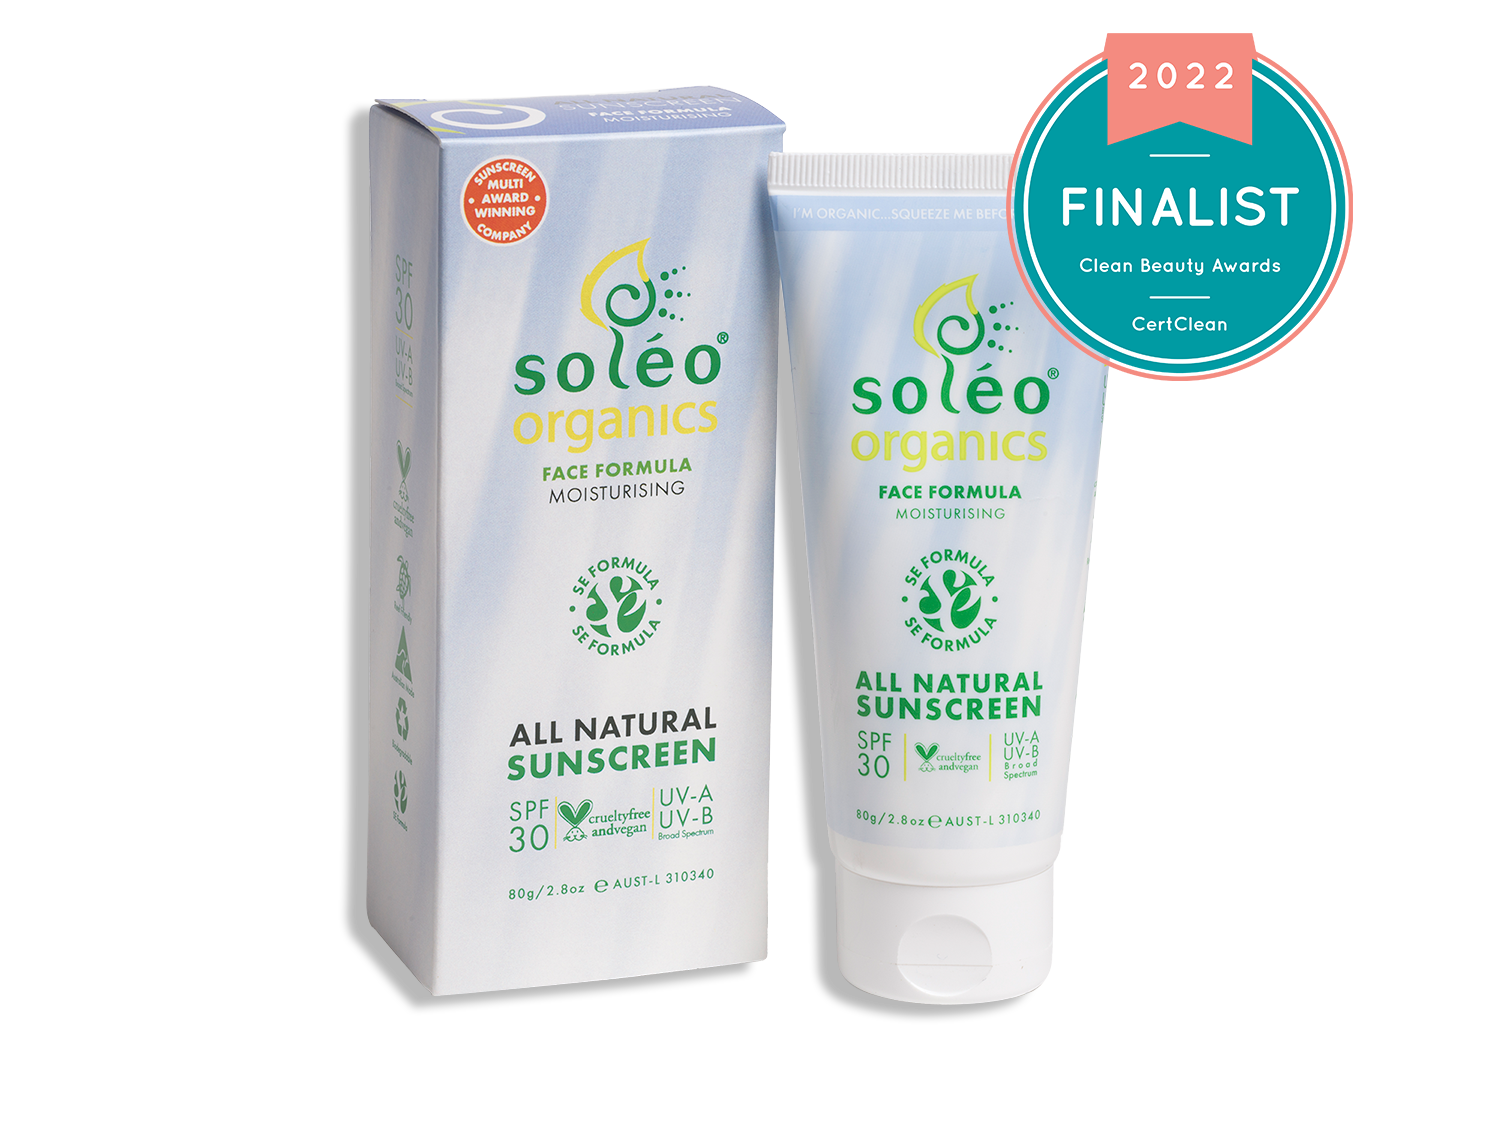 Soleo Organics natural face moisturising sunscreen